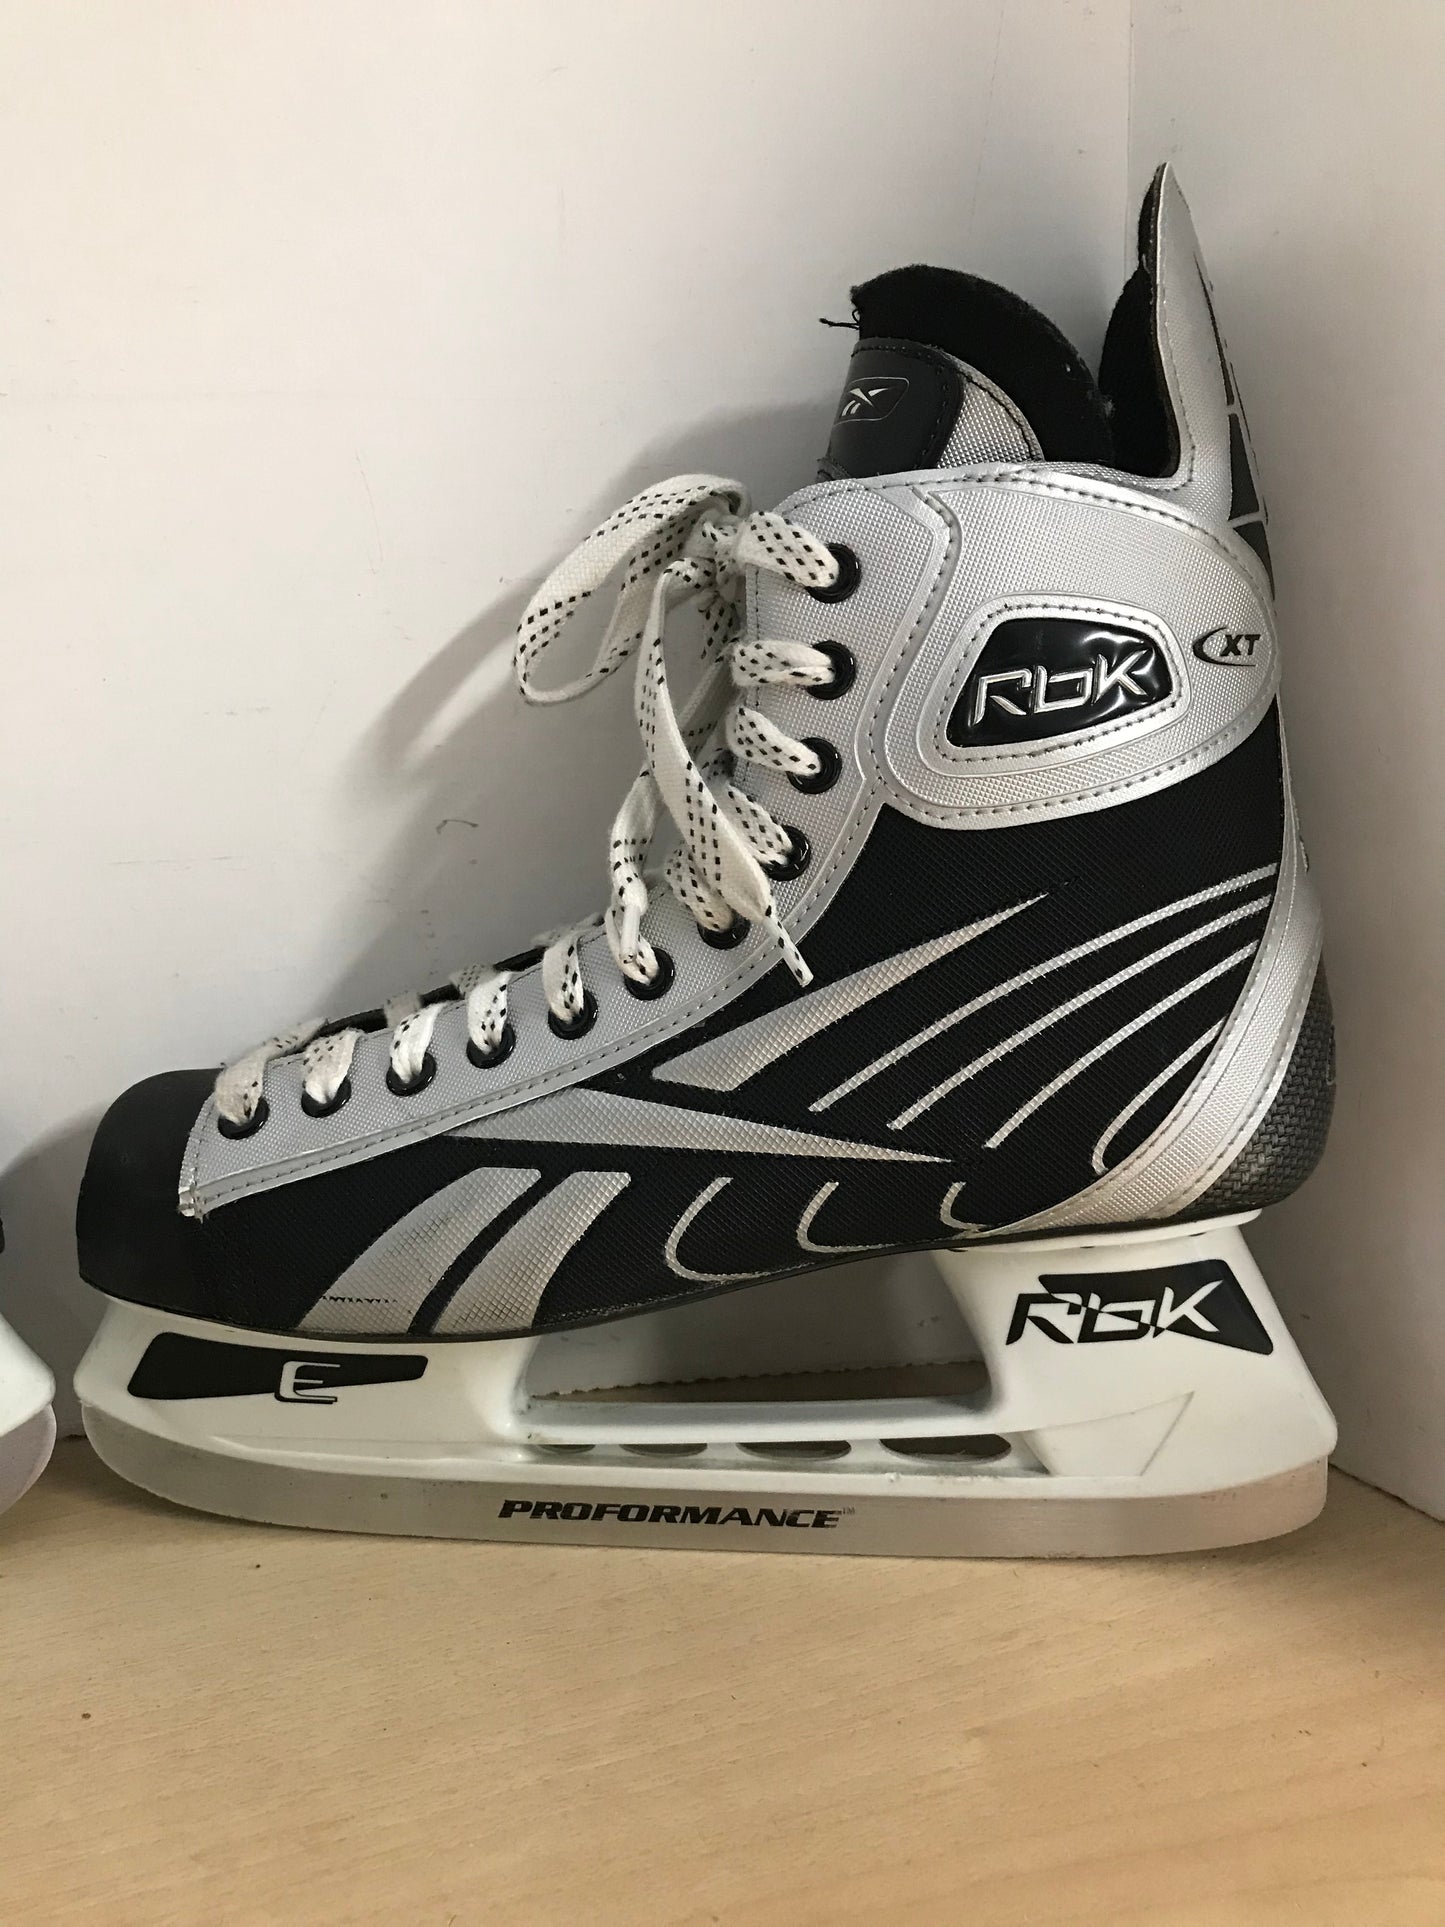 Hockey Skates Men's Size 11.5 Shoe Size Reebok XT New Demo Model